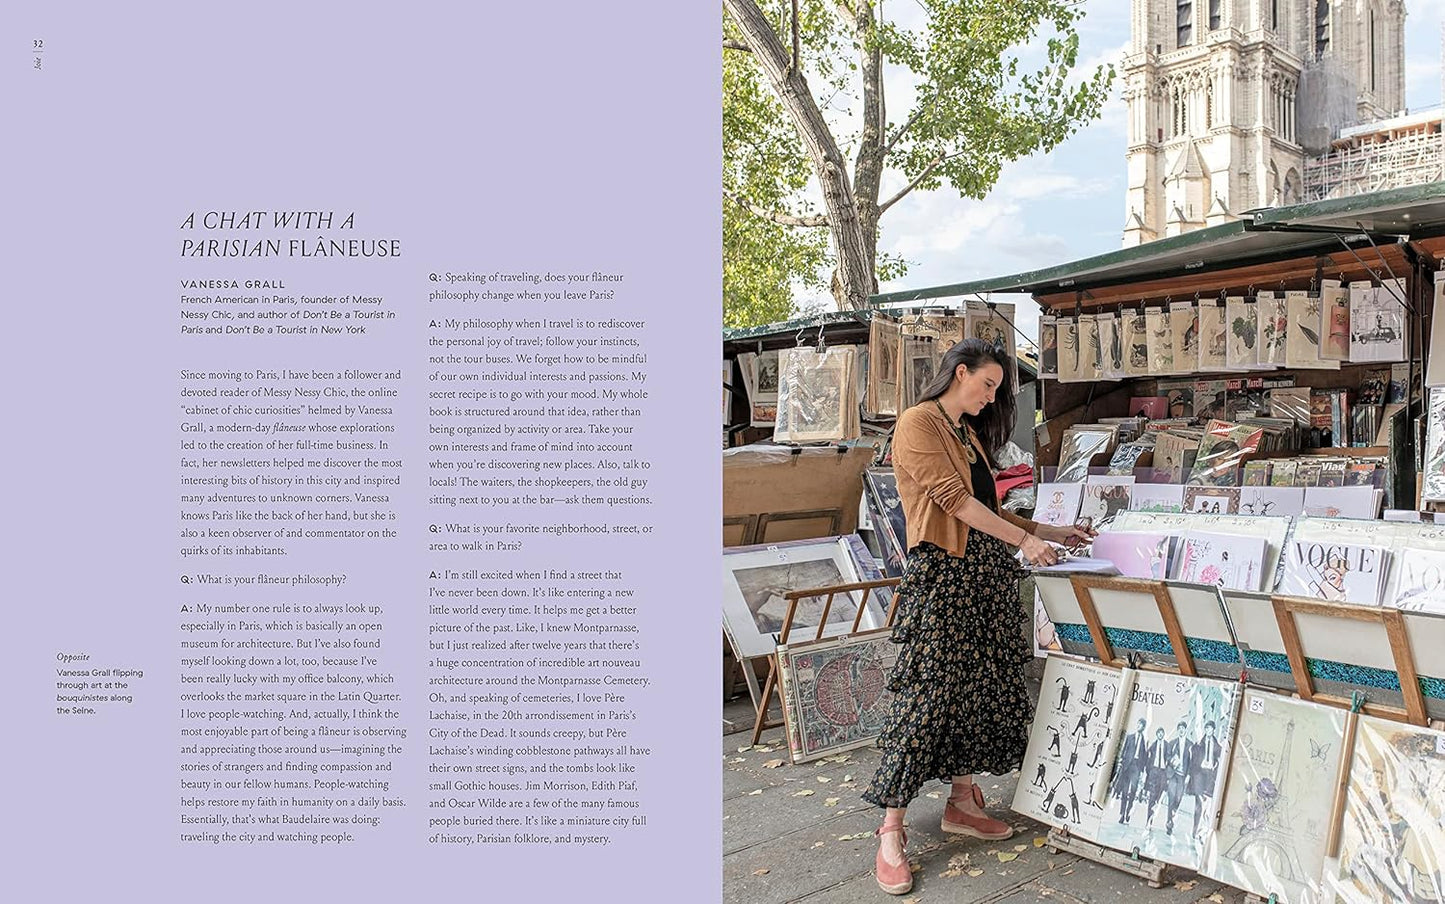 Joie: A Parisian's Guide to Celebrating the Good Life by Ajiri Aki 